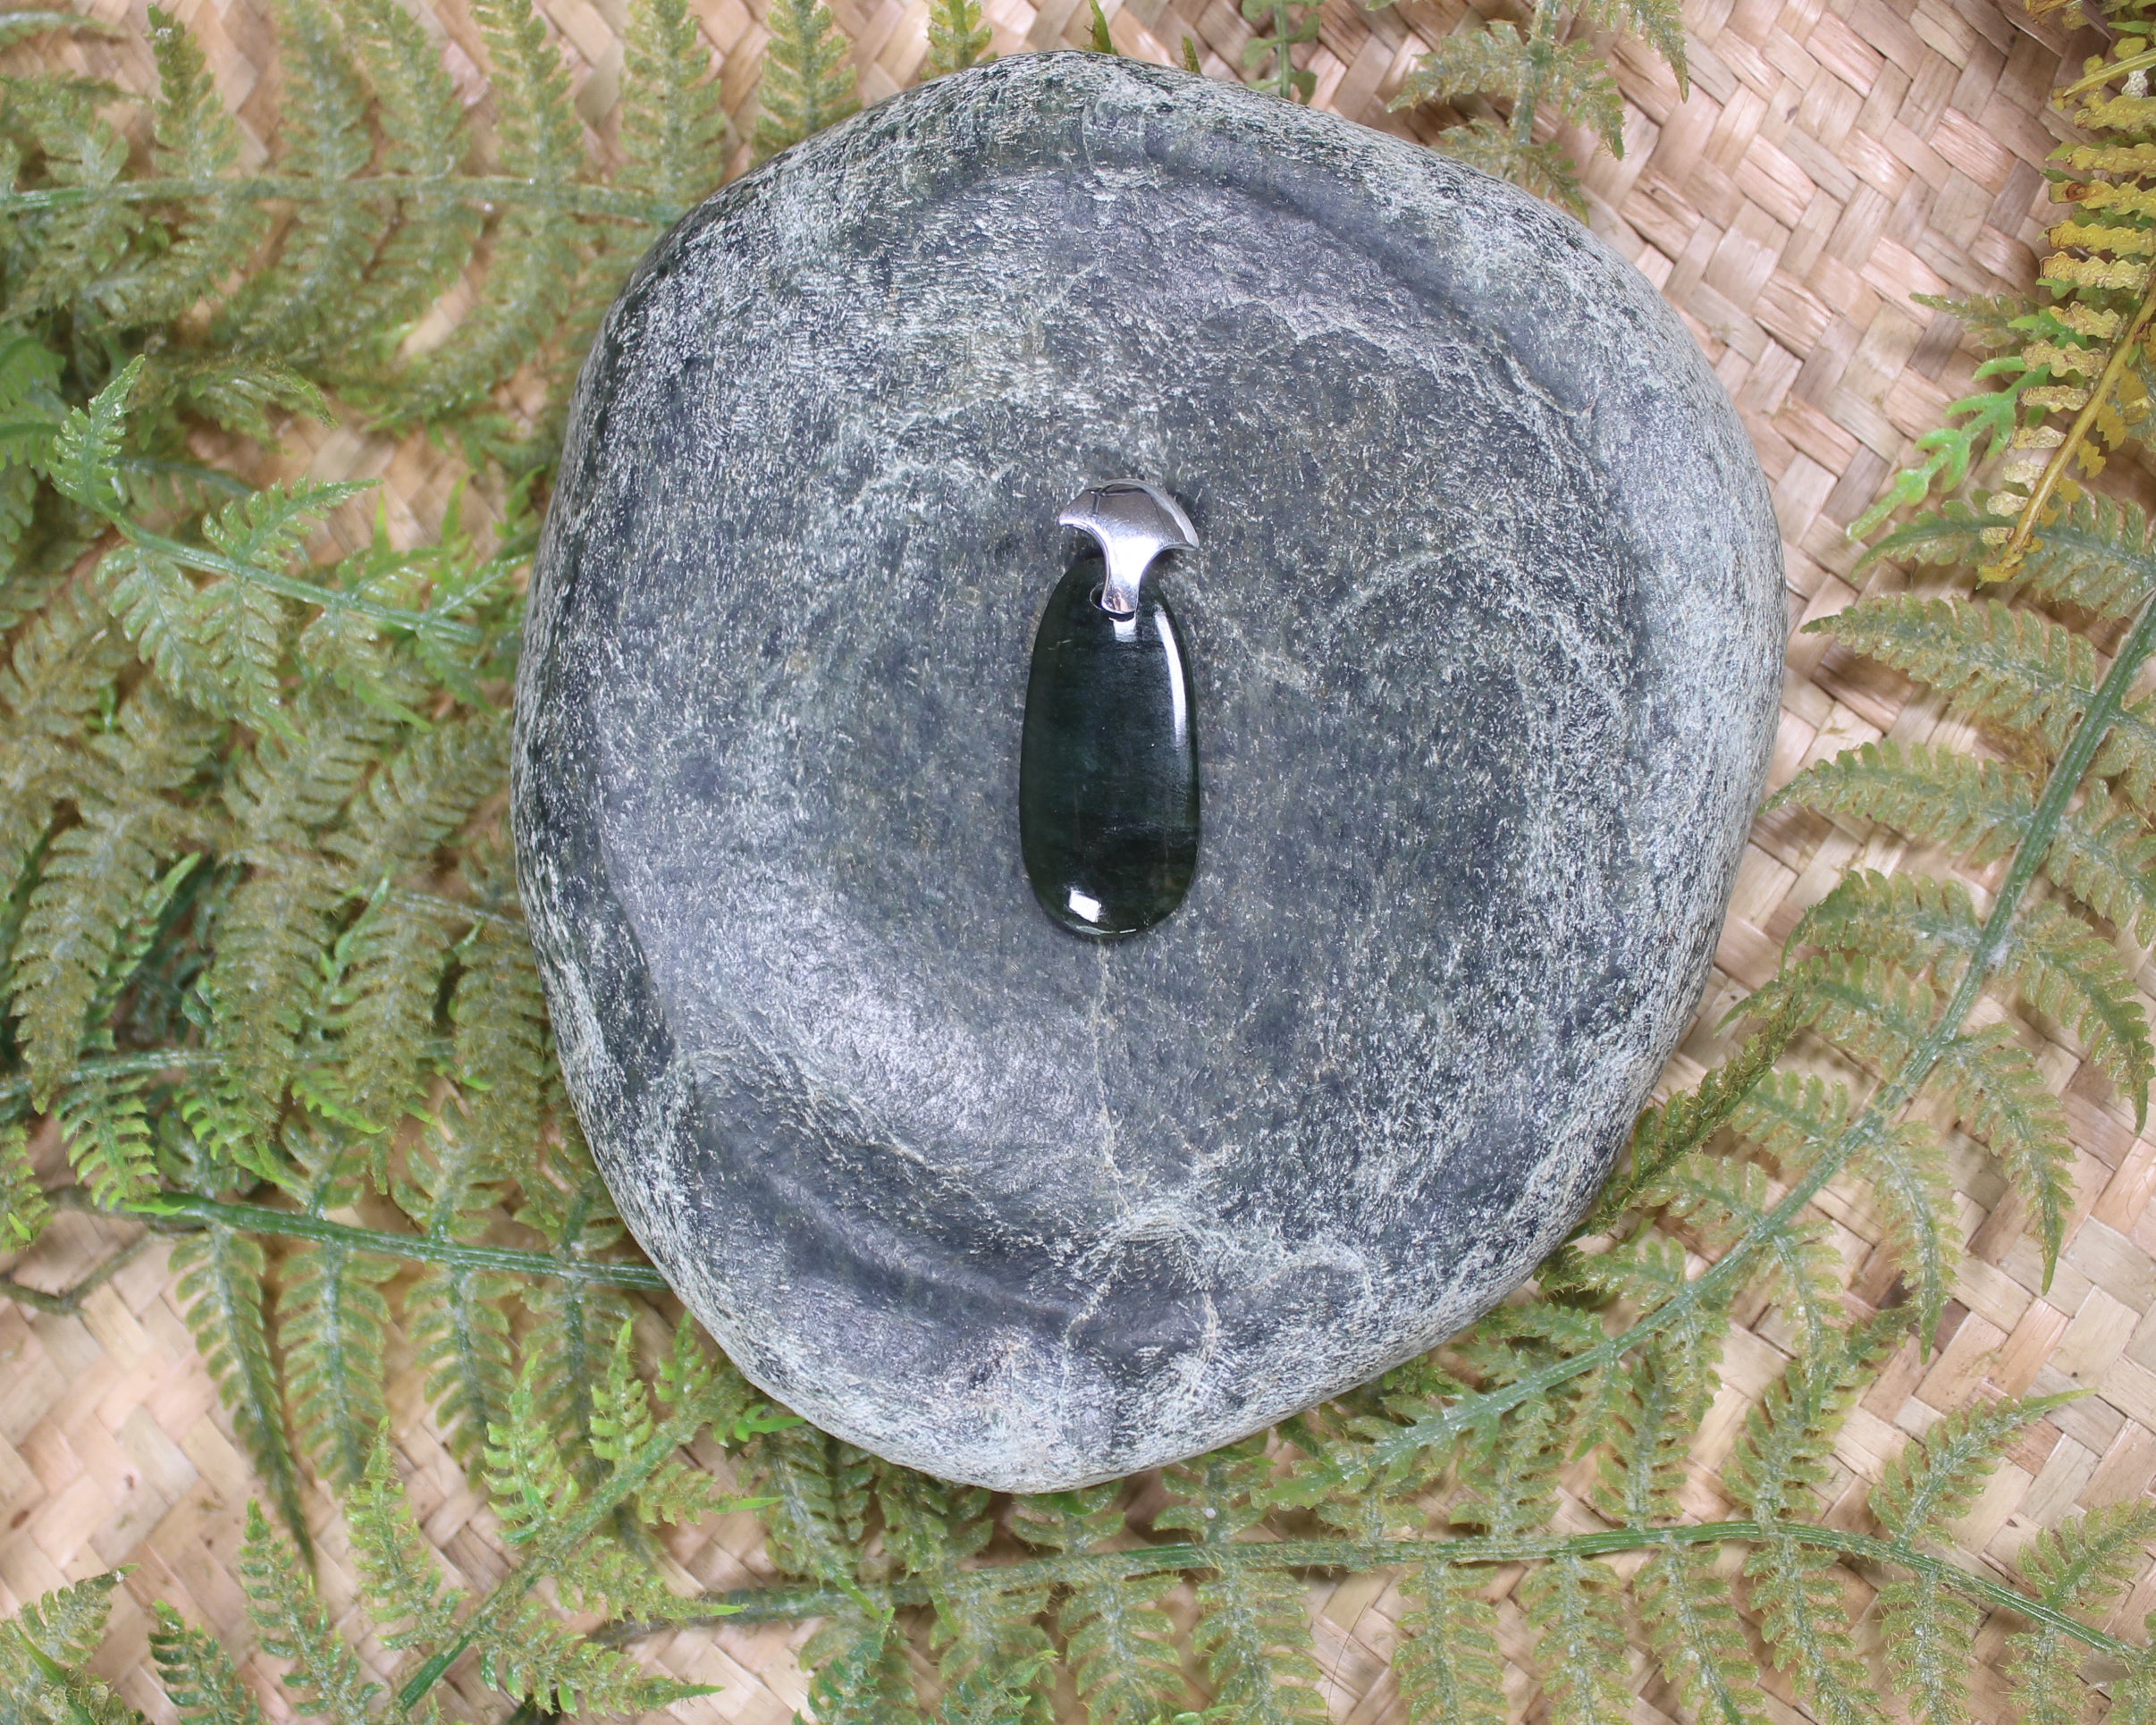 Rimu Pounamu pendant set in Sterling Silver - NZ Greenstone